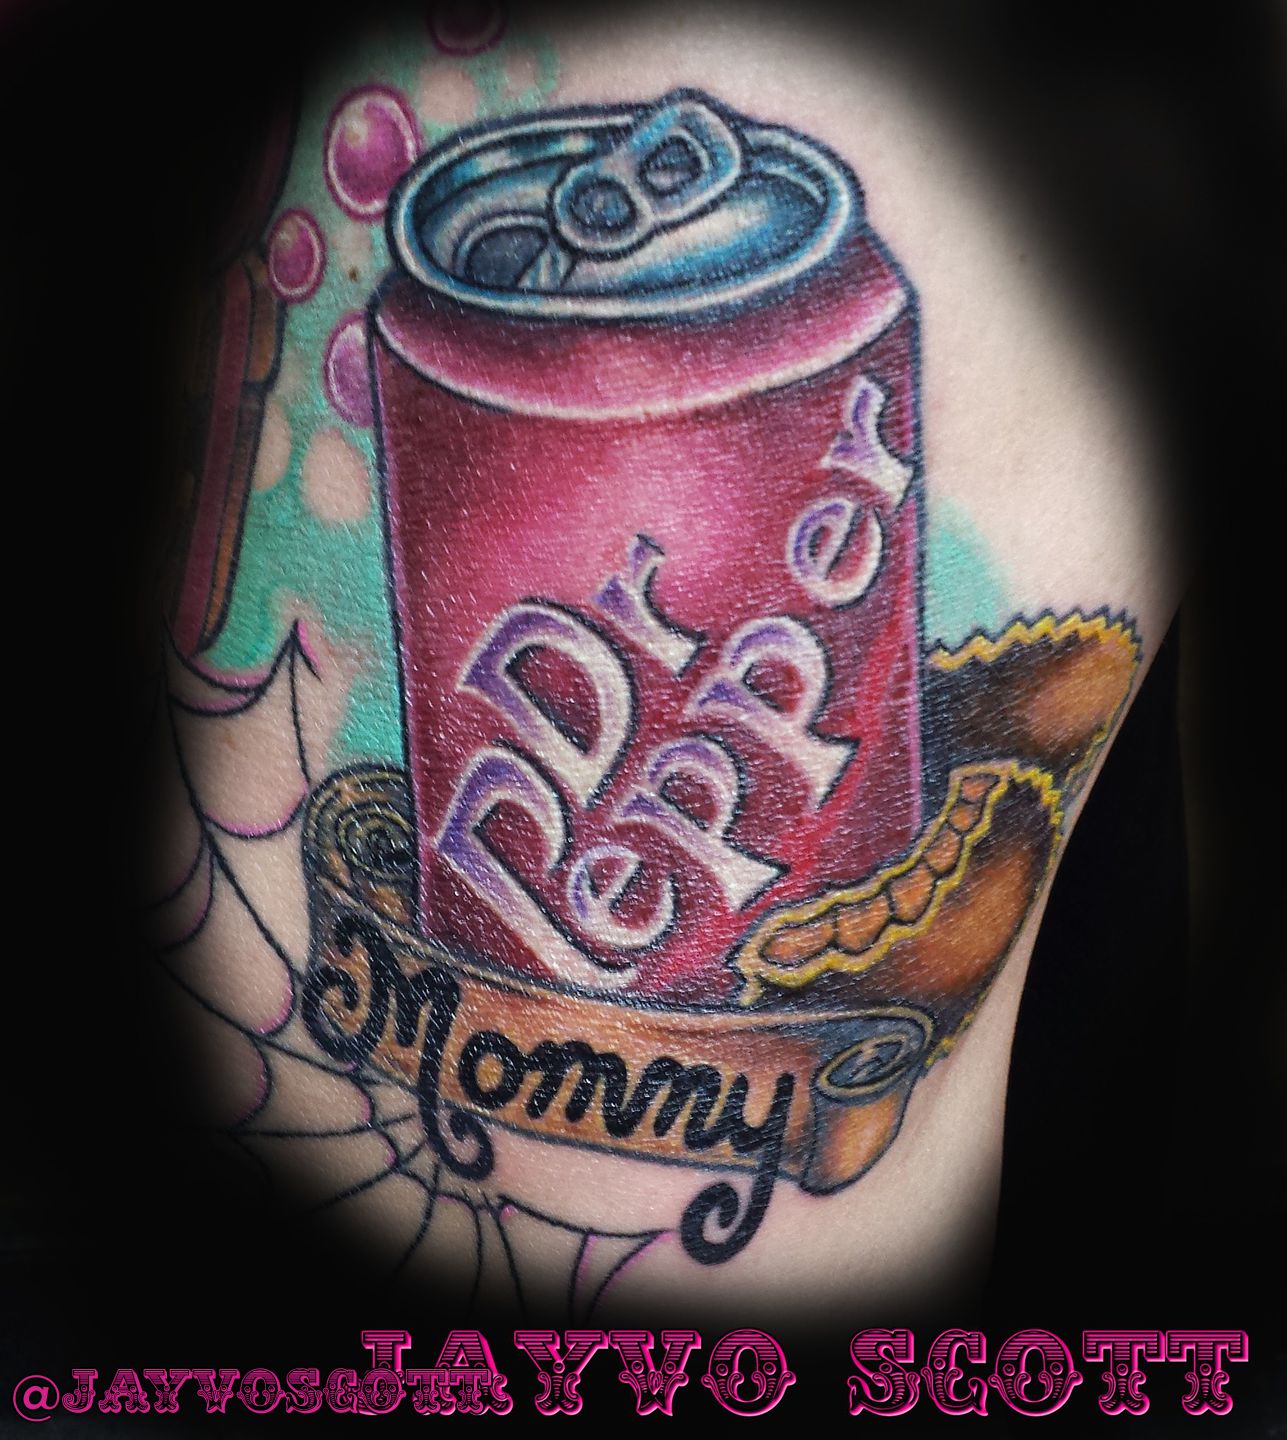 jayvoscott:artist-jayvo-scott-dr-pepper -23-flavors-drinks-mommy-reeses-peanut-butter-cups-waterloo-tattoo -storage-neotat-machines-drink-beverage-logo-brand